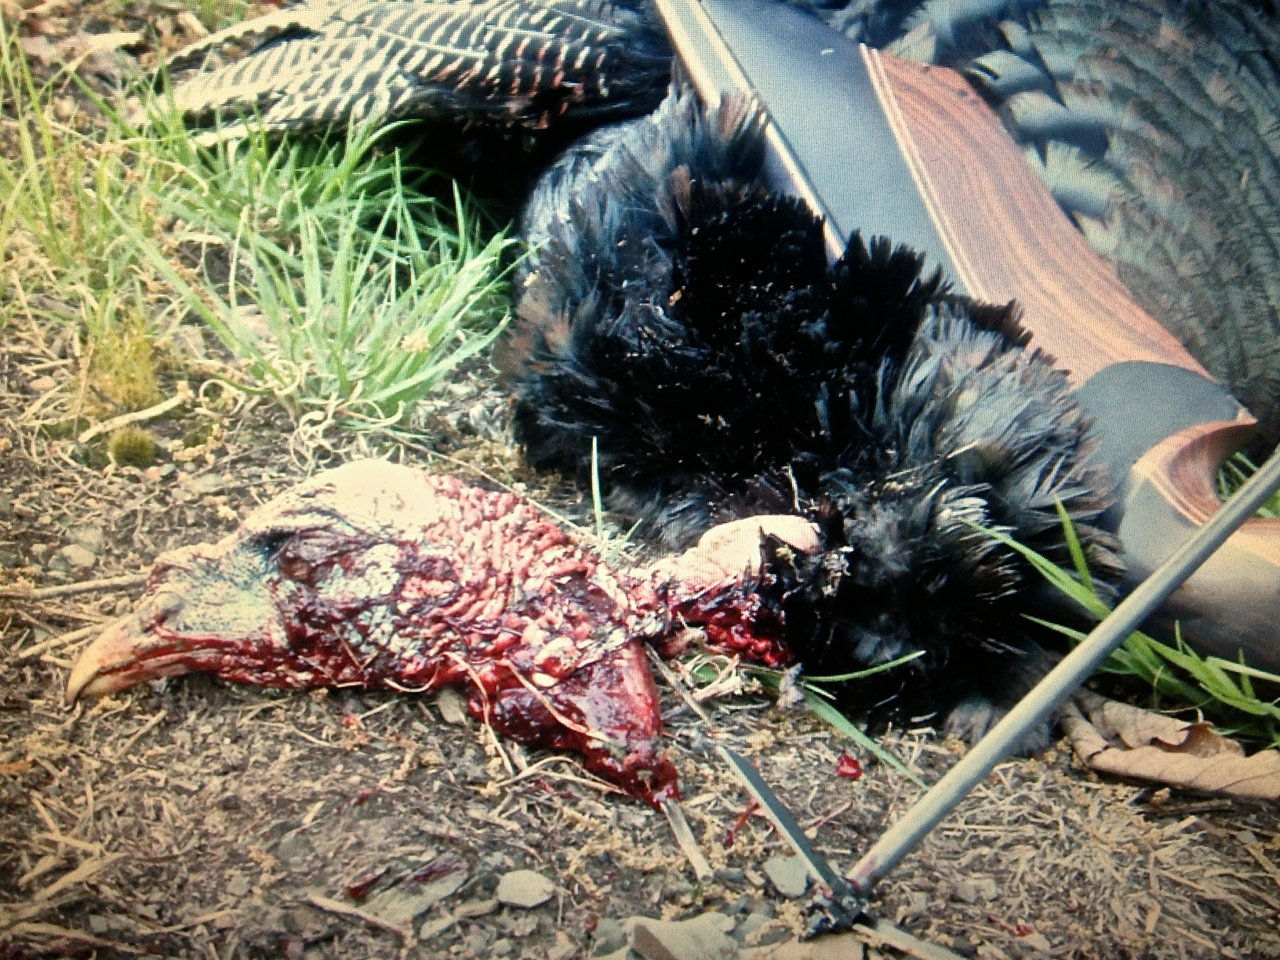 decapitated turkey